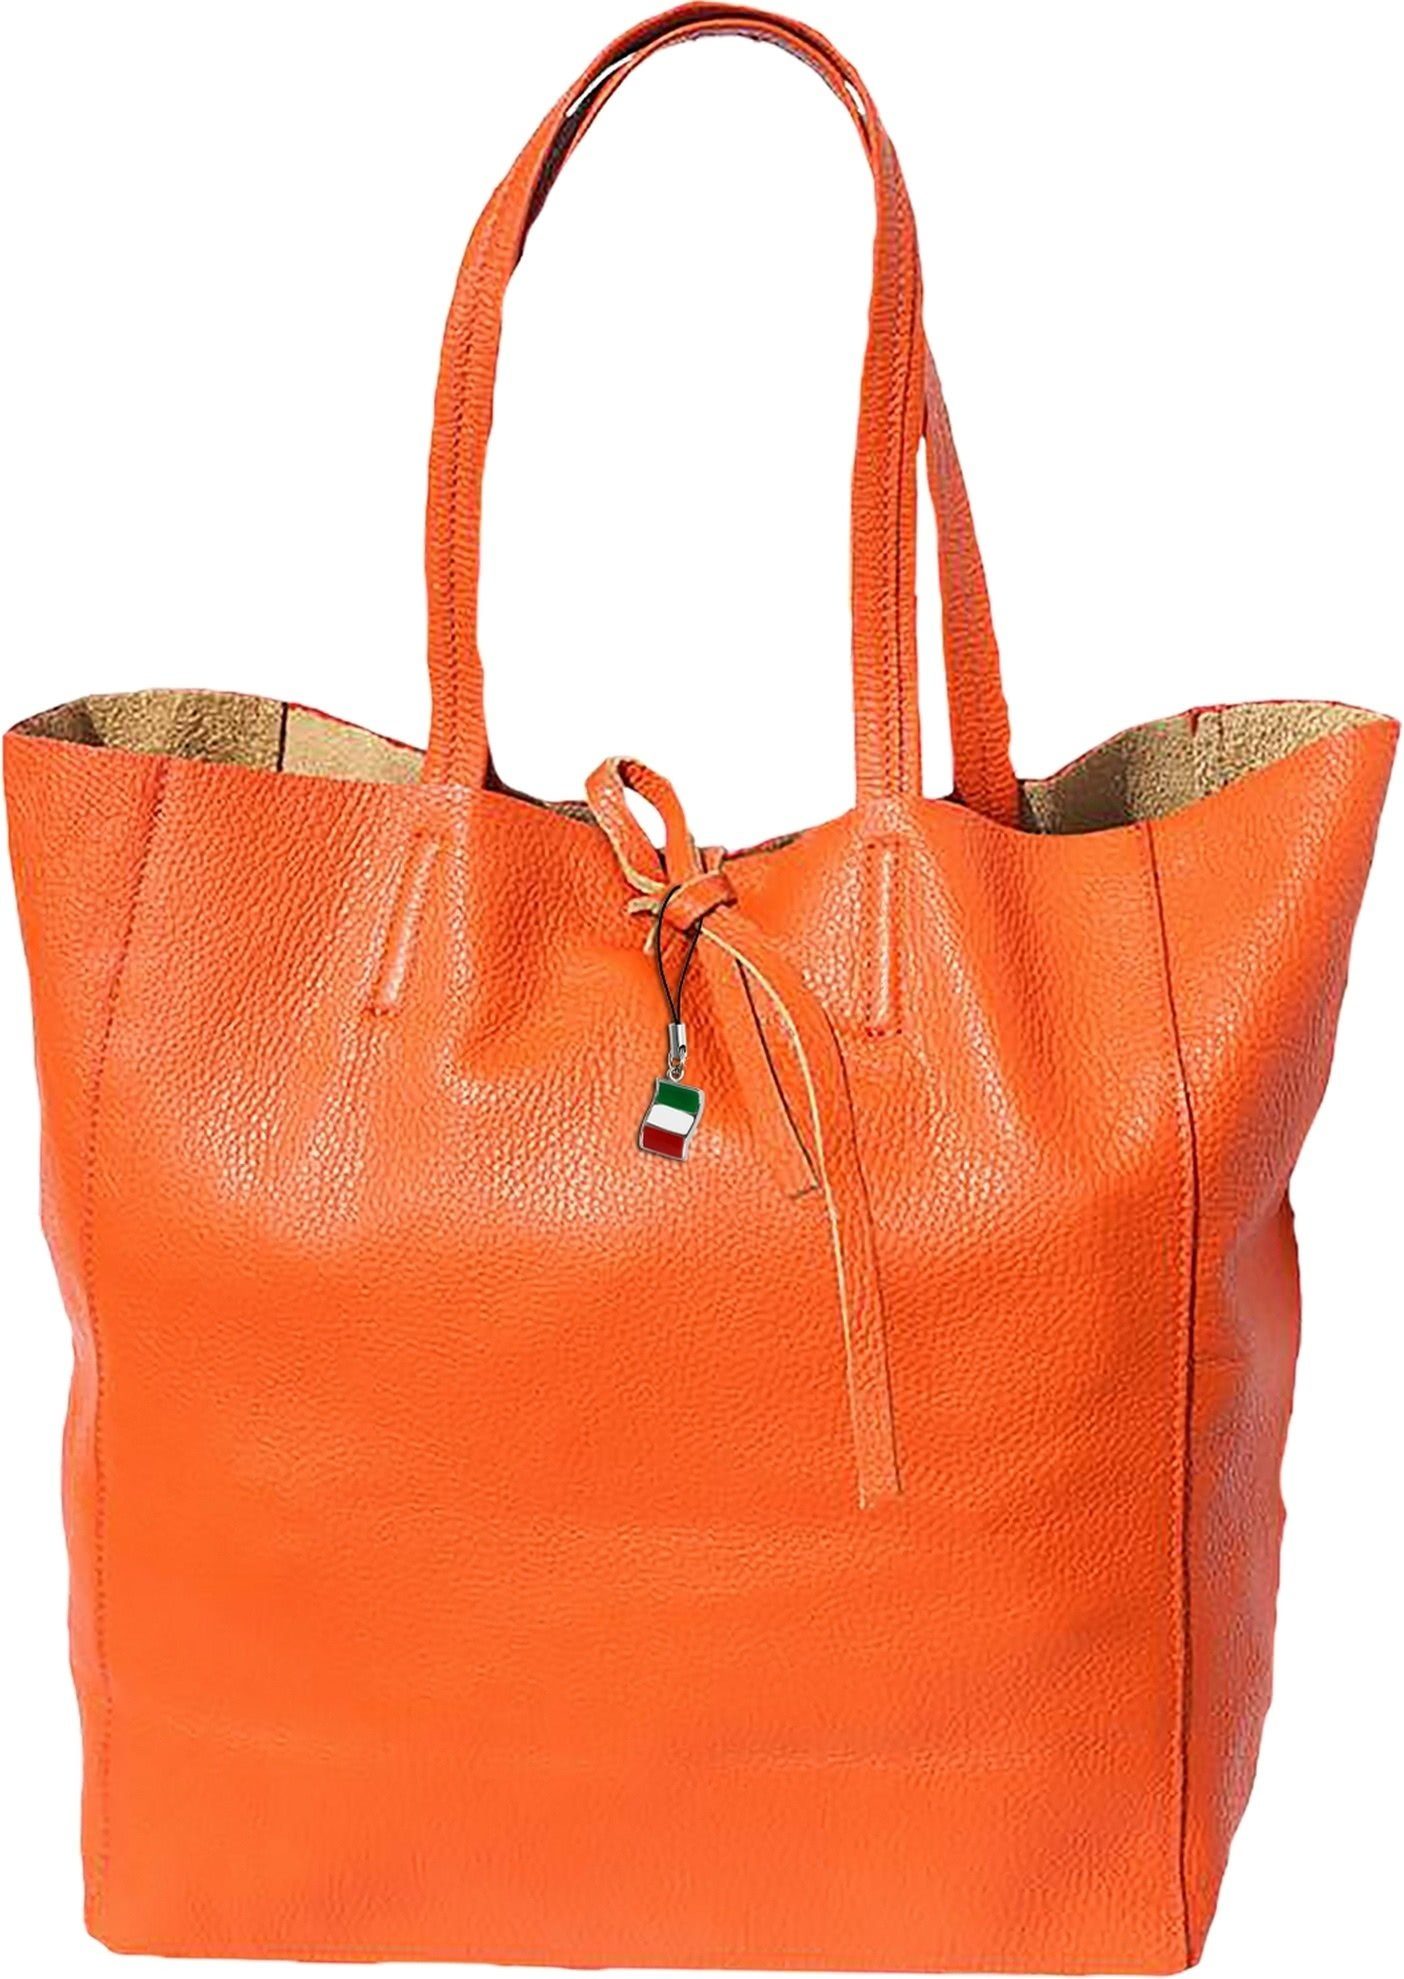 FLORENCE Shopper Florence ital. Echtleder Shopper orange, Damen Tasche aus  Echtleder in orange, ca. 30cm Breite, Made-In Italy